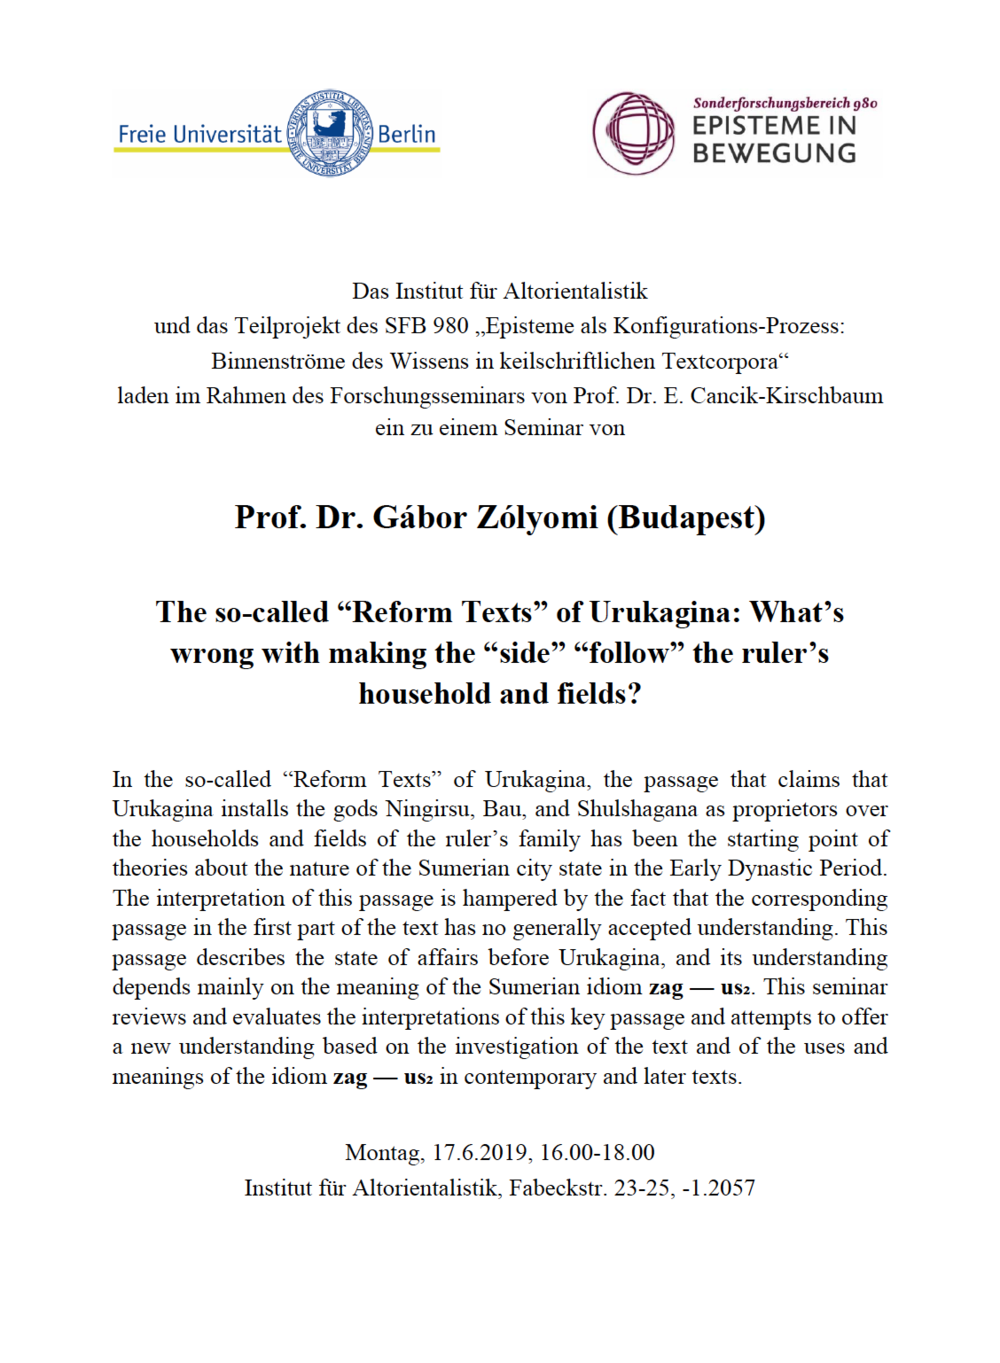 Prof. Dr. Gábor Zólyomi – "The so-called "Reform-Texts" of Urukagina"